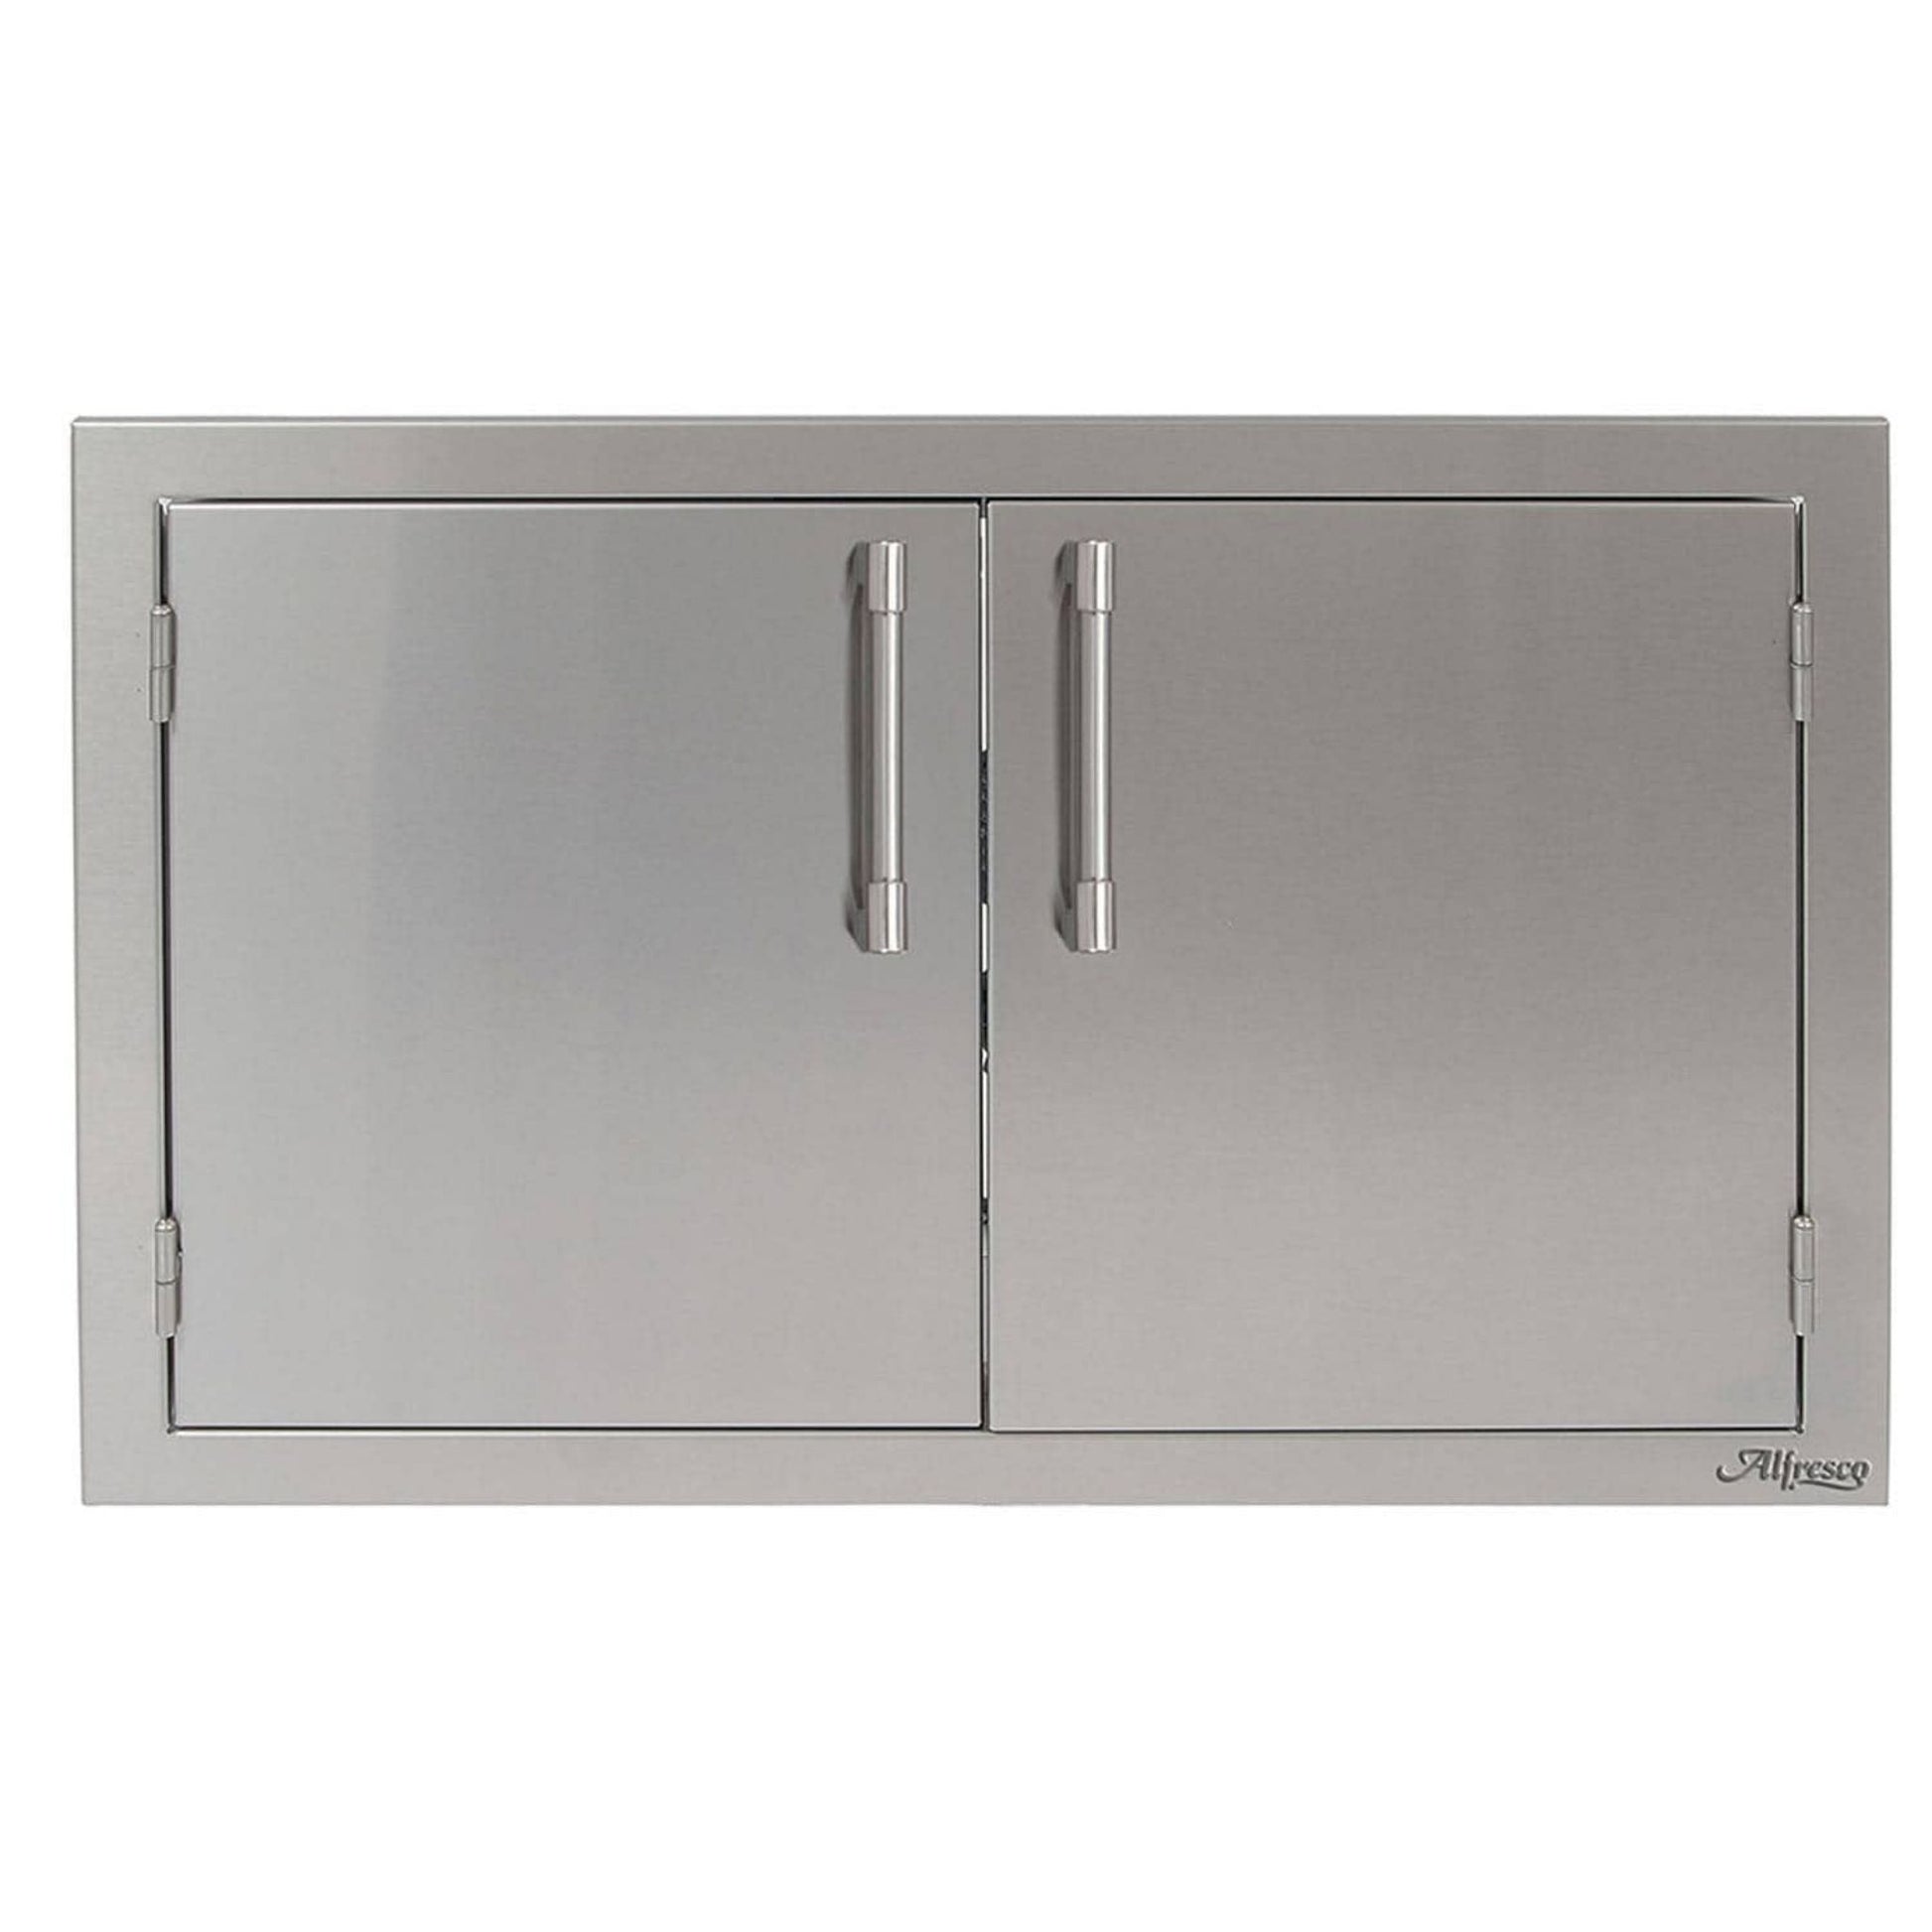 Alfresco 42" Signal Grey Gloss Stainless Steel Double Access Doors